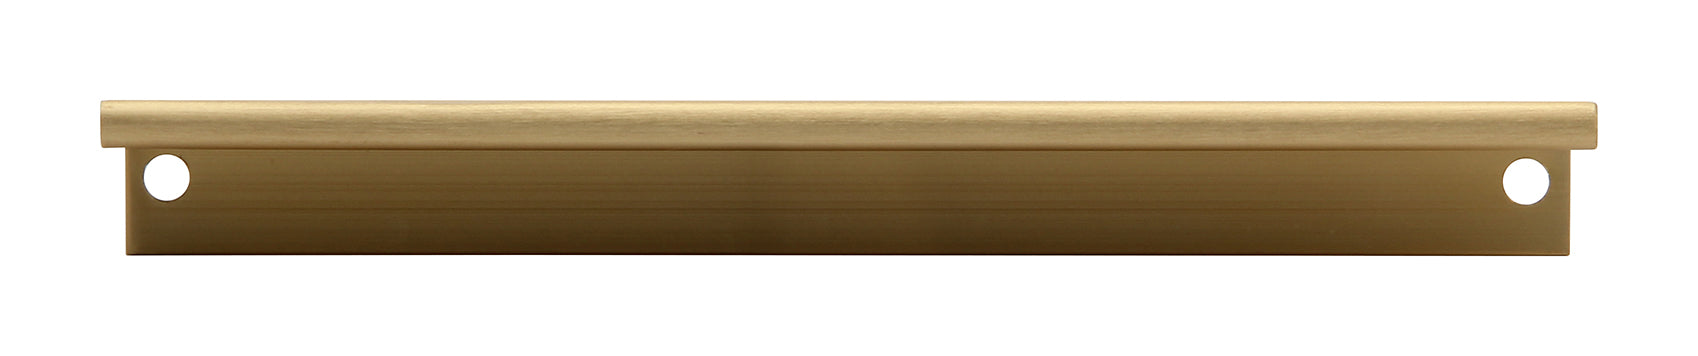 Silverline P1001 Aluminum Mount Finger Edge Tab Pull Handle in Satin Brass Finish Various Sizes